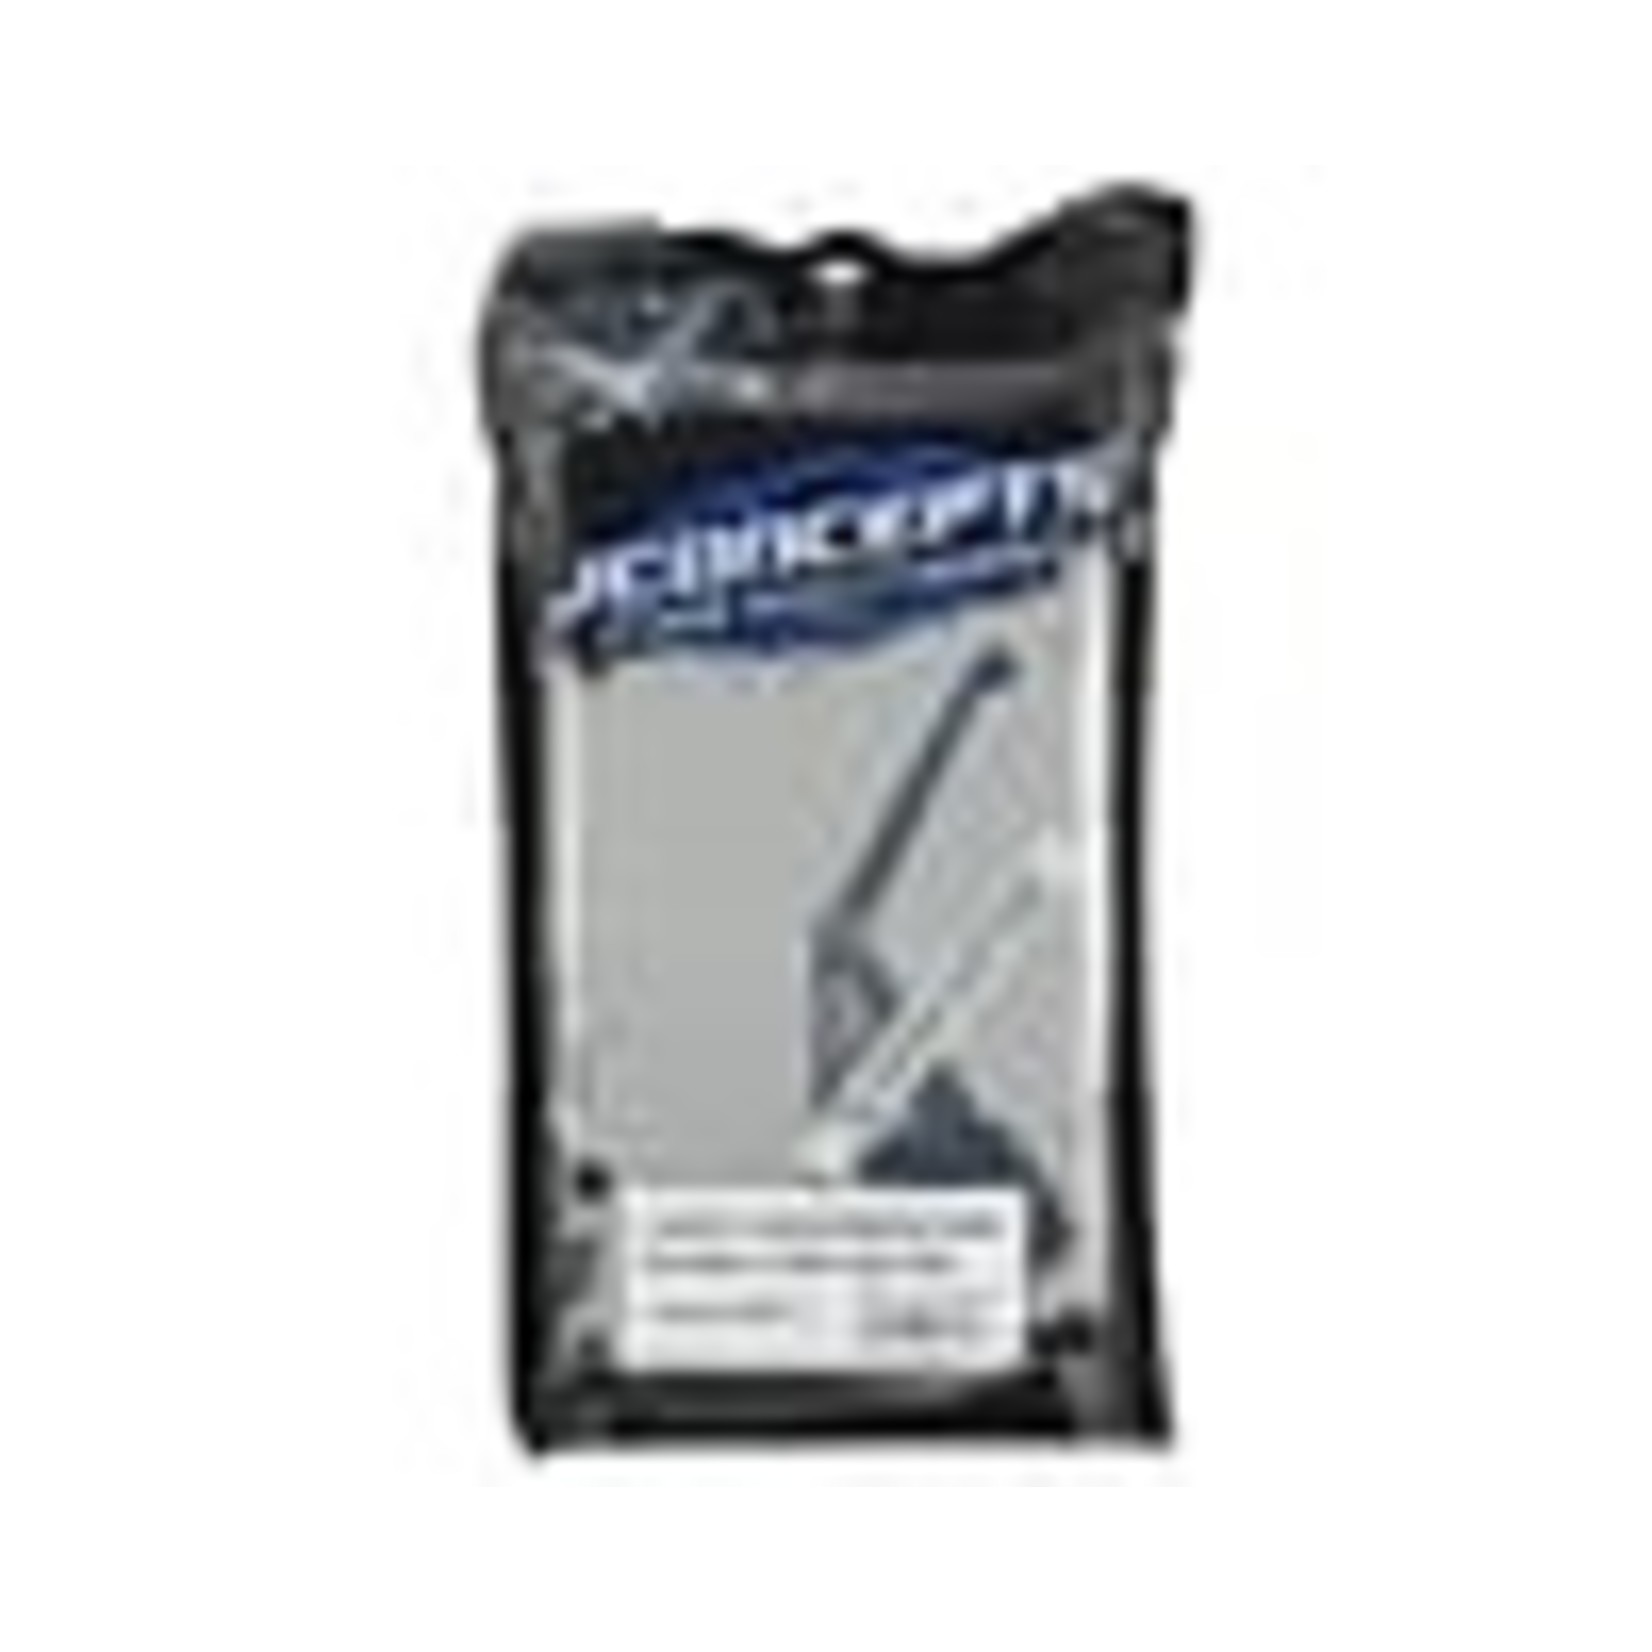 J Concepts JCO22822  Aluminum Ride Height Gauge, 10-40mm Black